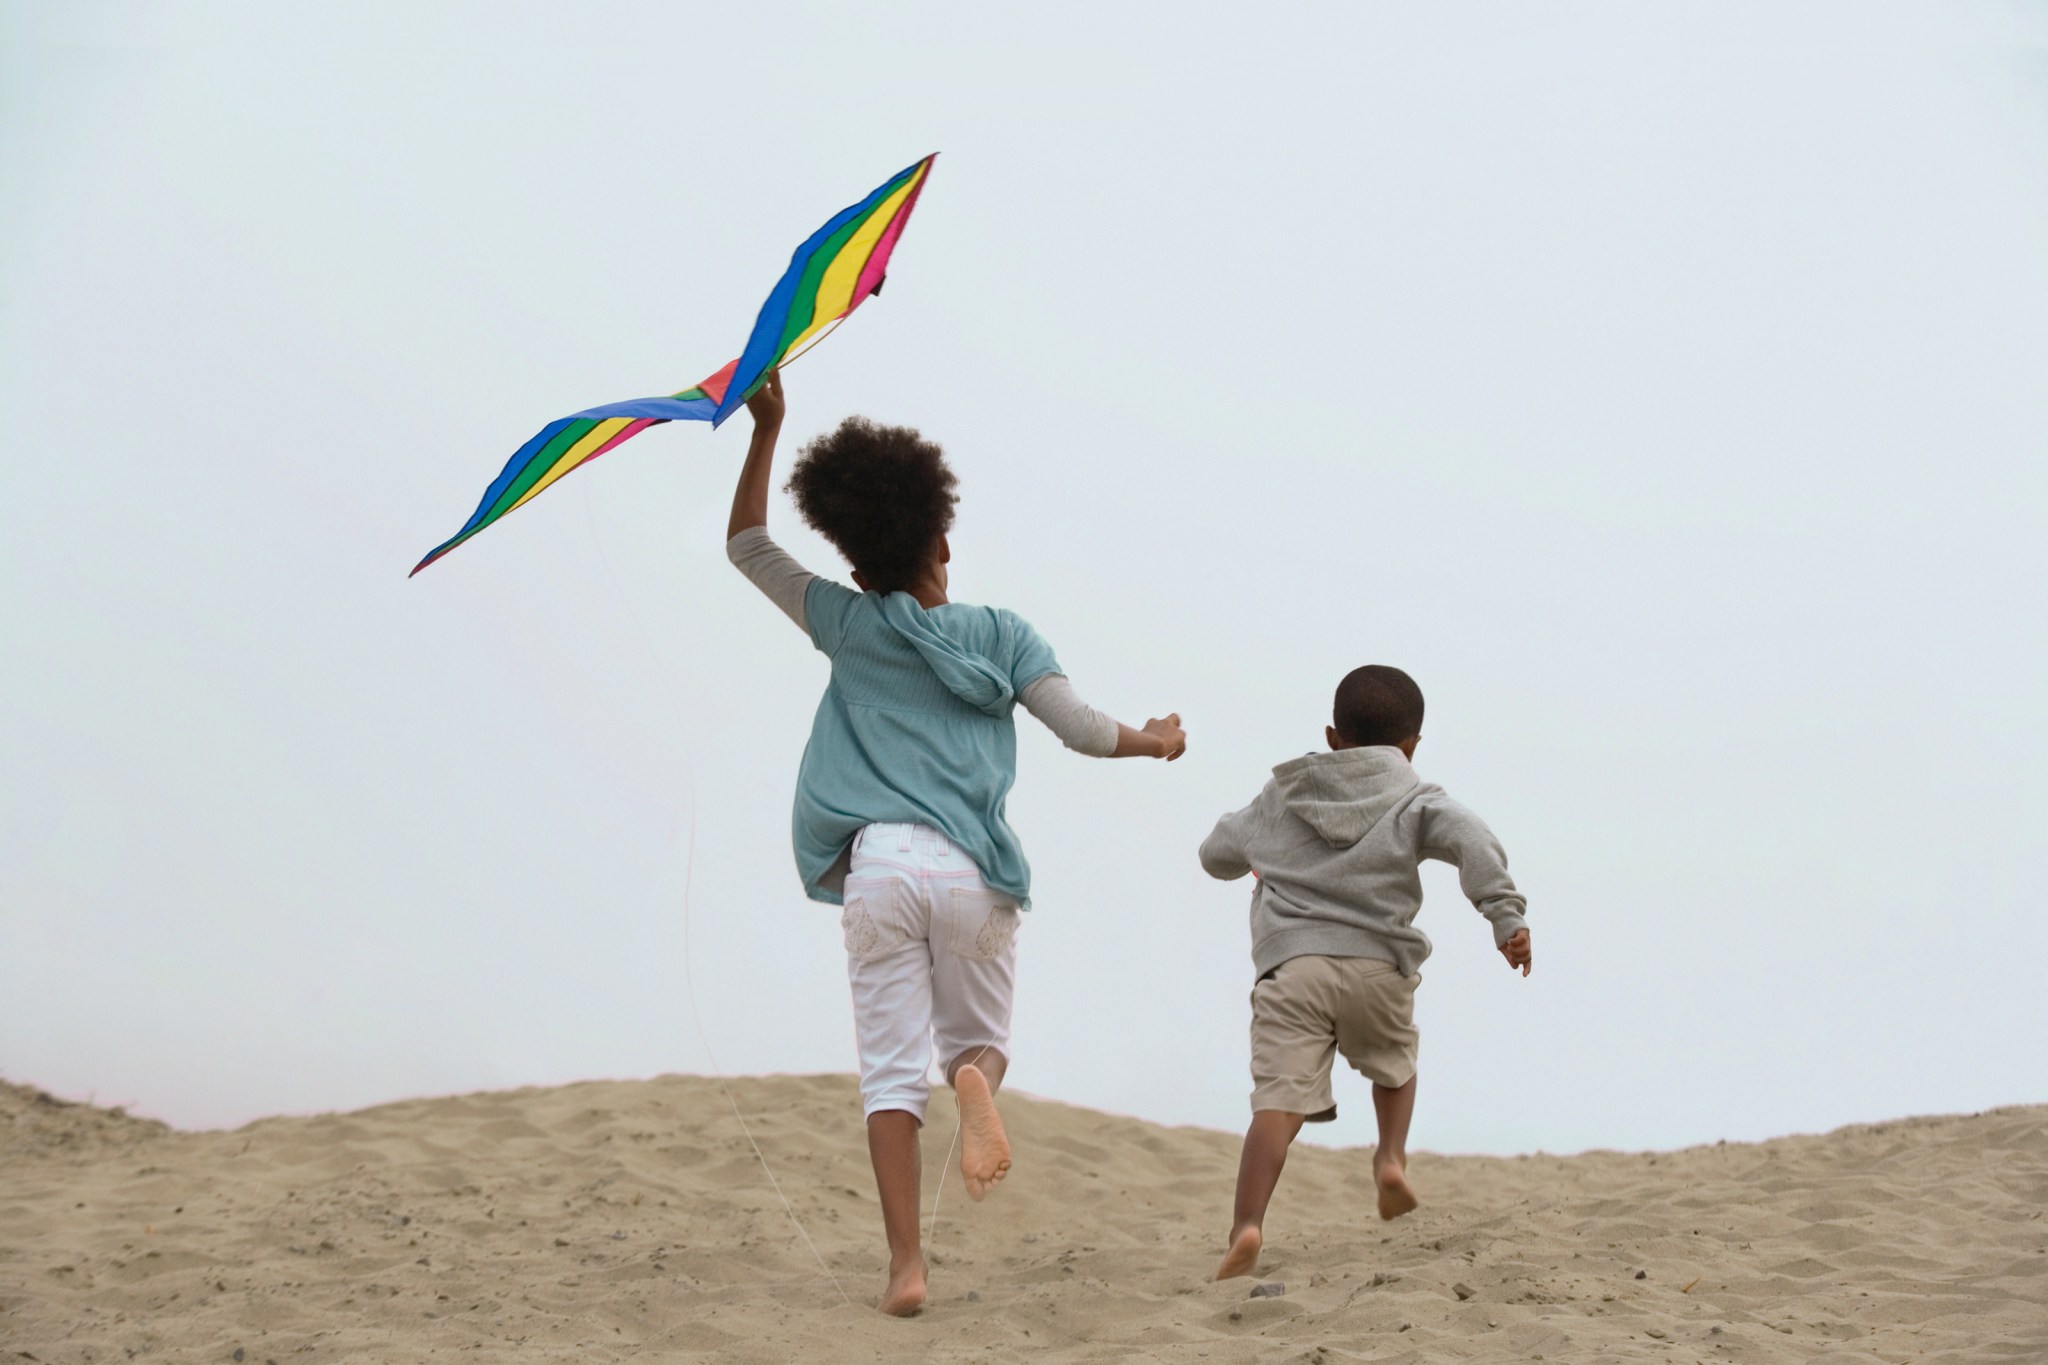 Kids flying kites at the beach